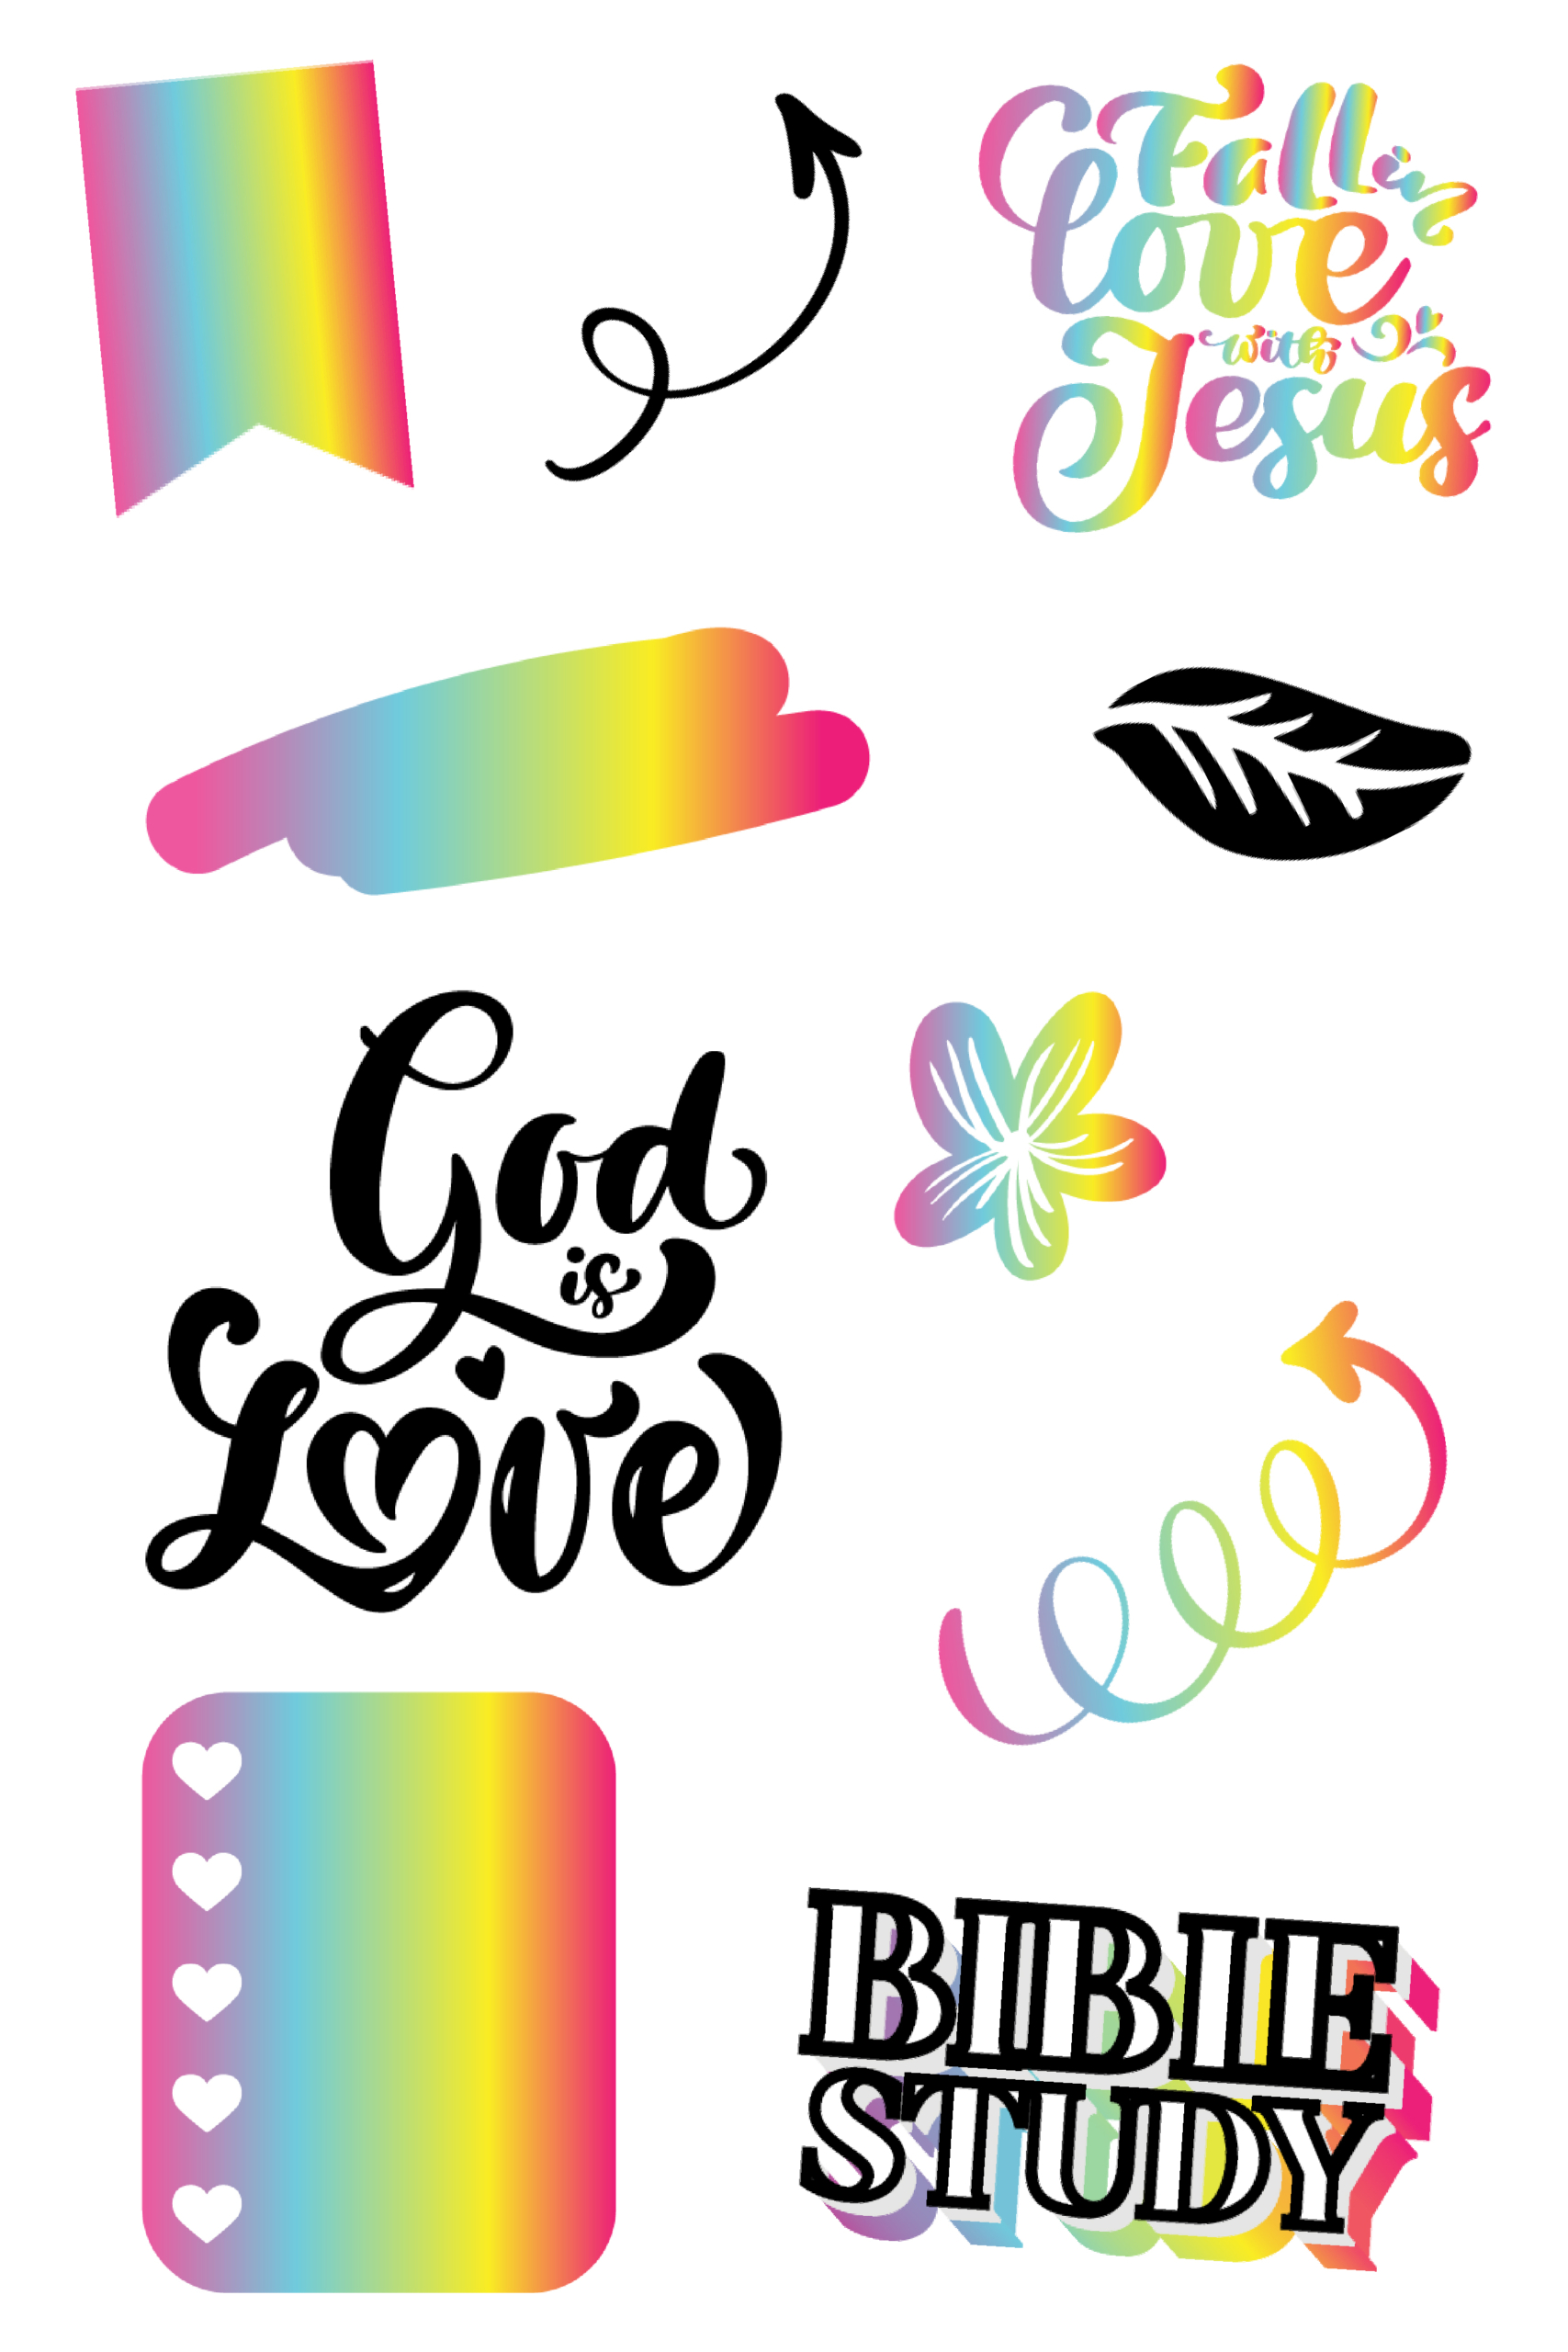 Christian Affirmations Stickers - PlanningFaithCo